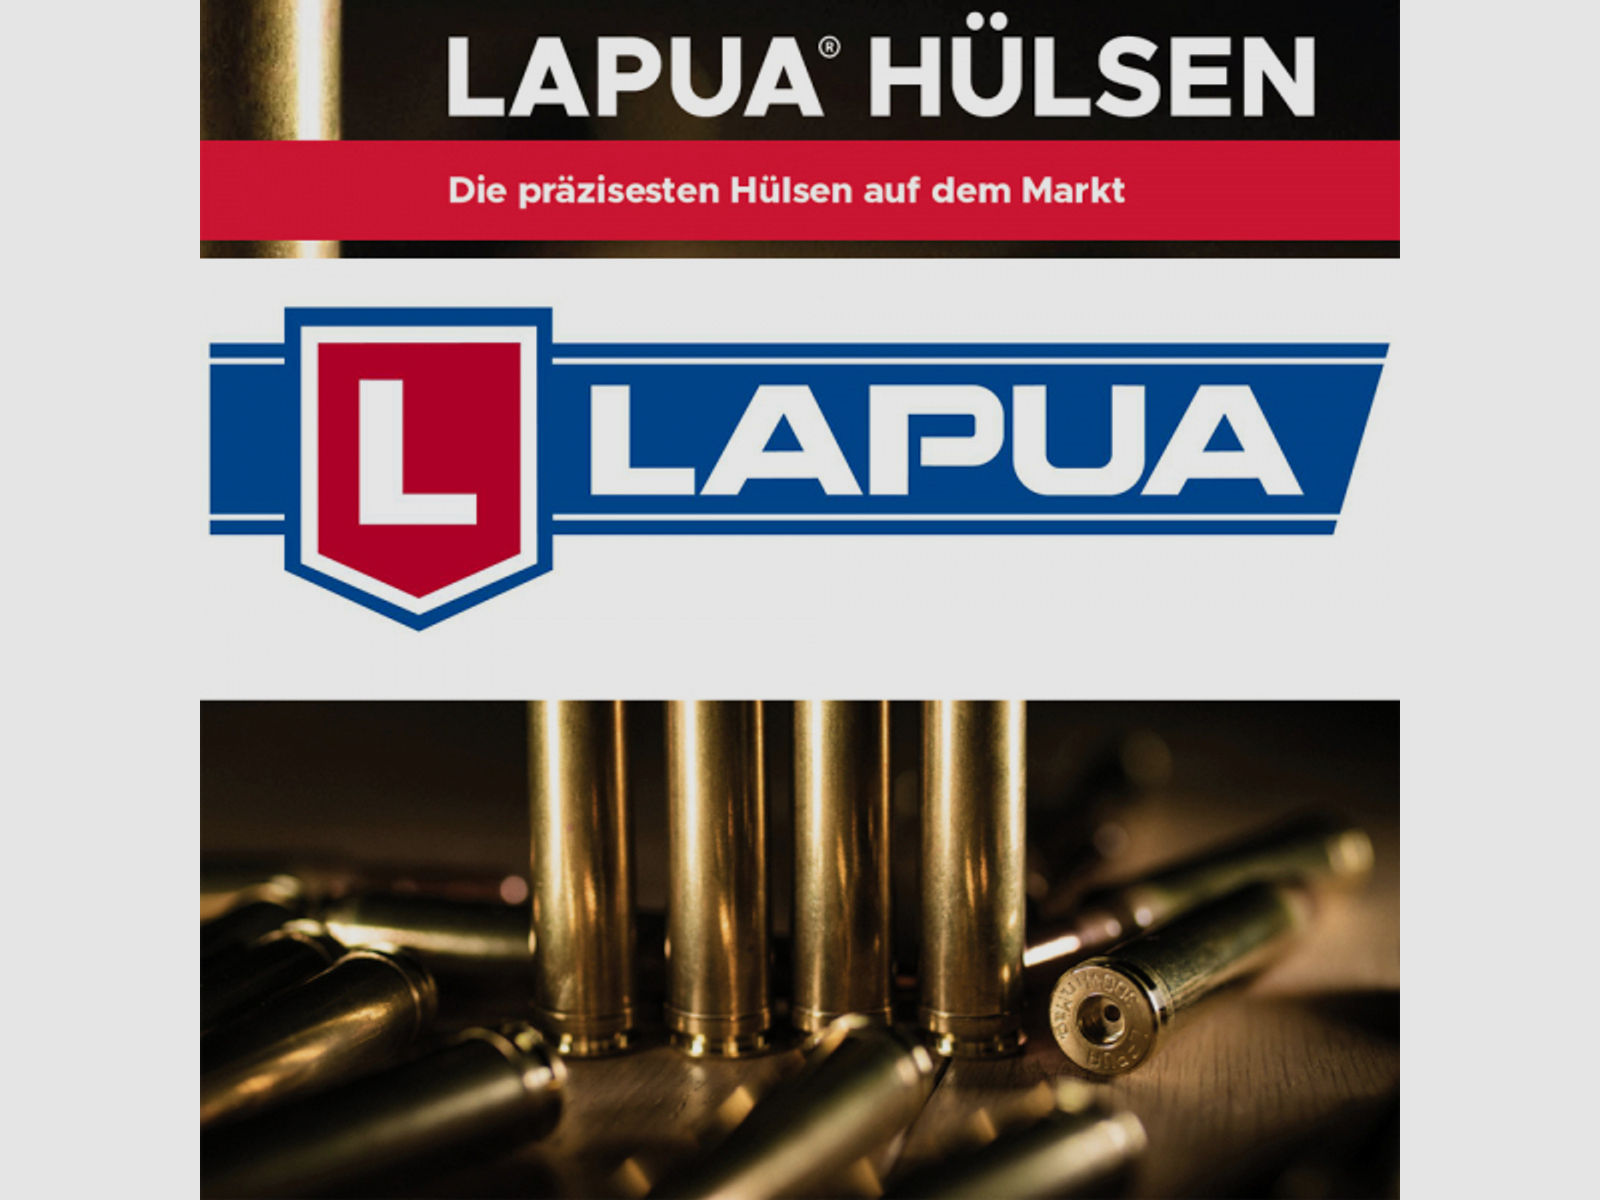 100 Stück LAPUA Hülsen .308 Win.(7,62x51mm) Boxerzündung #4PH7217C inkl. praktischem Papierladebrett